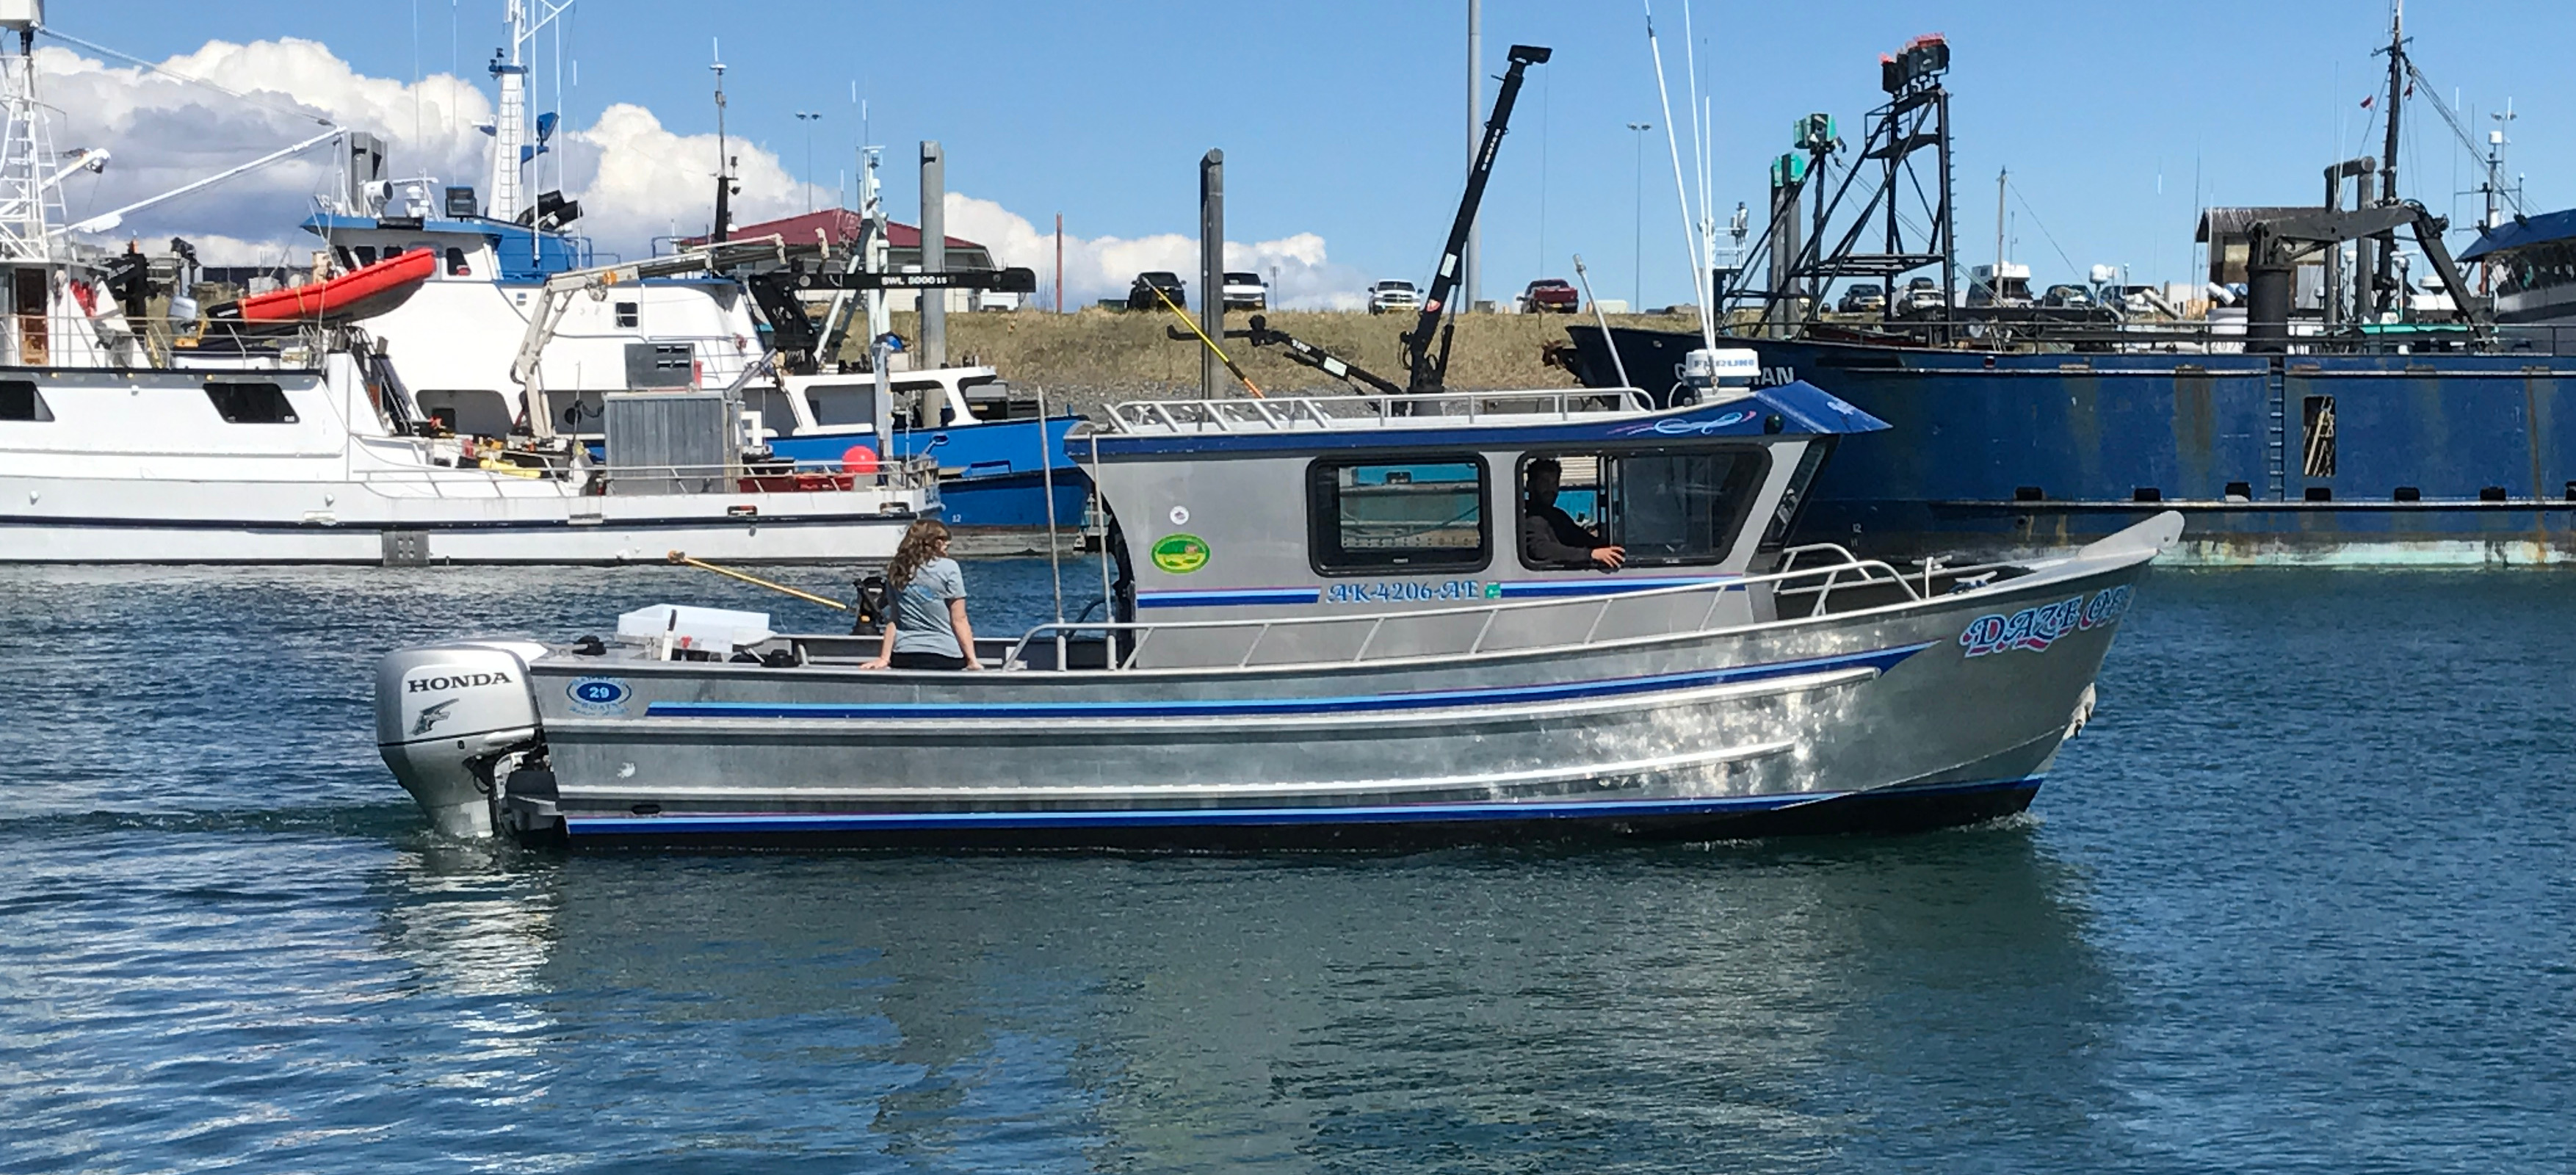 halibut and salmon charter boats